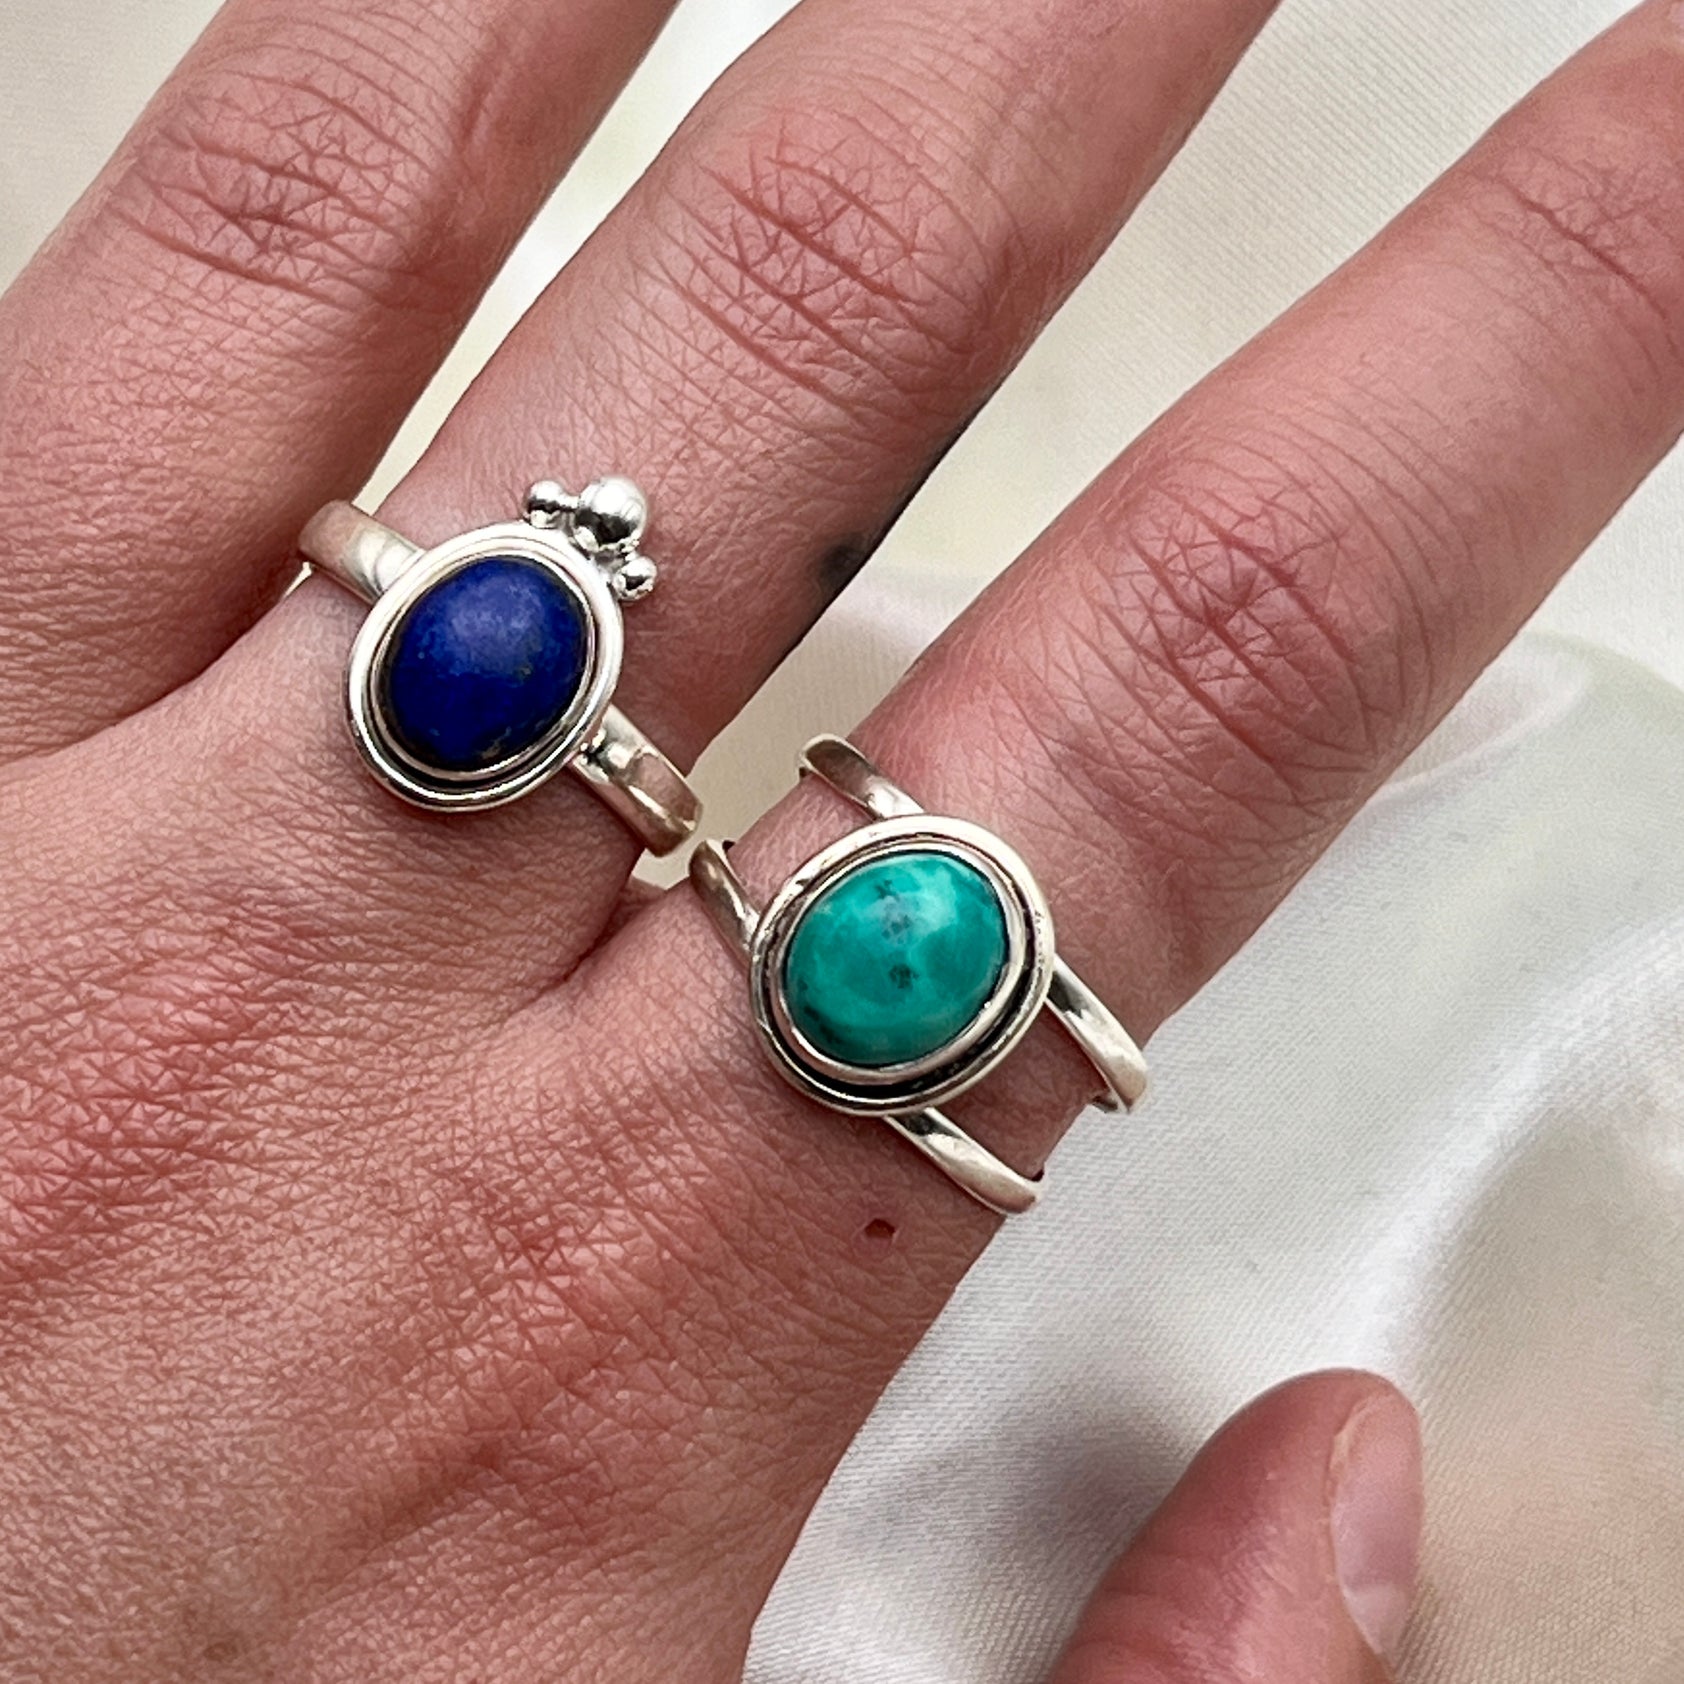 Turquoise Magnesite Ring: Size 9